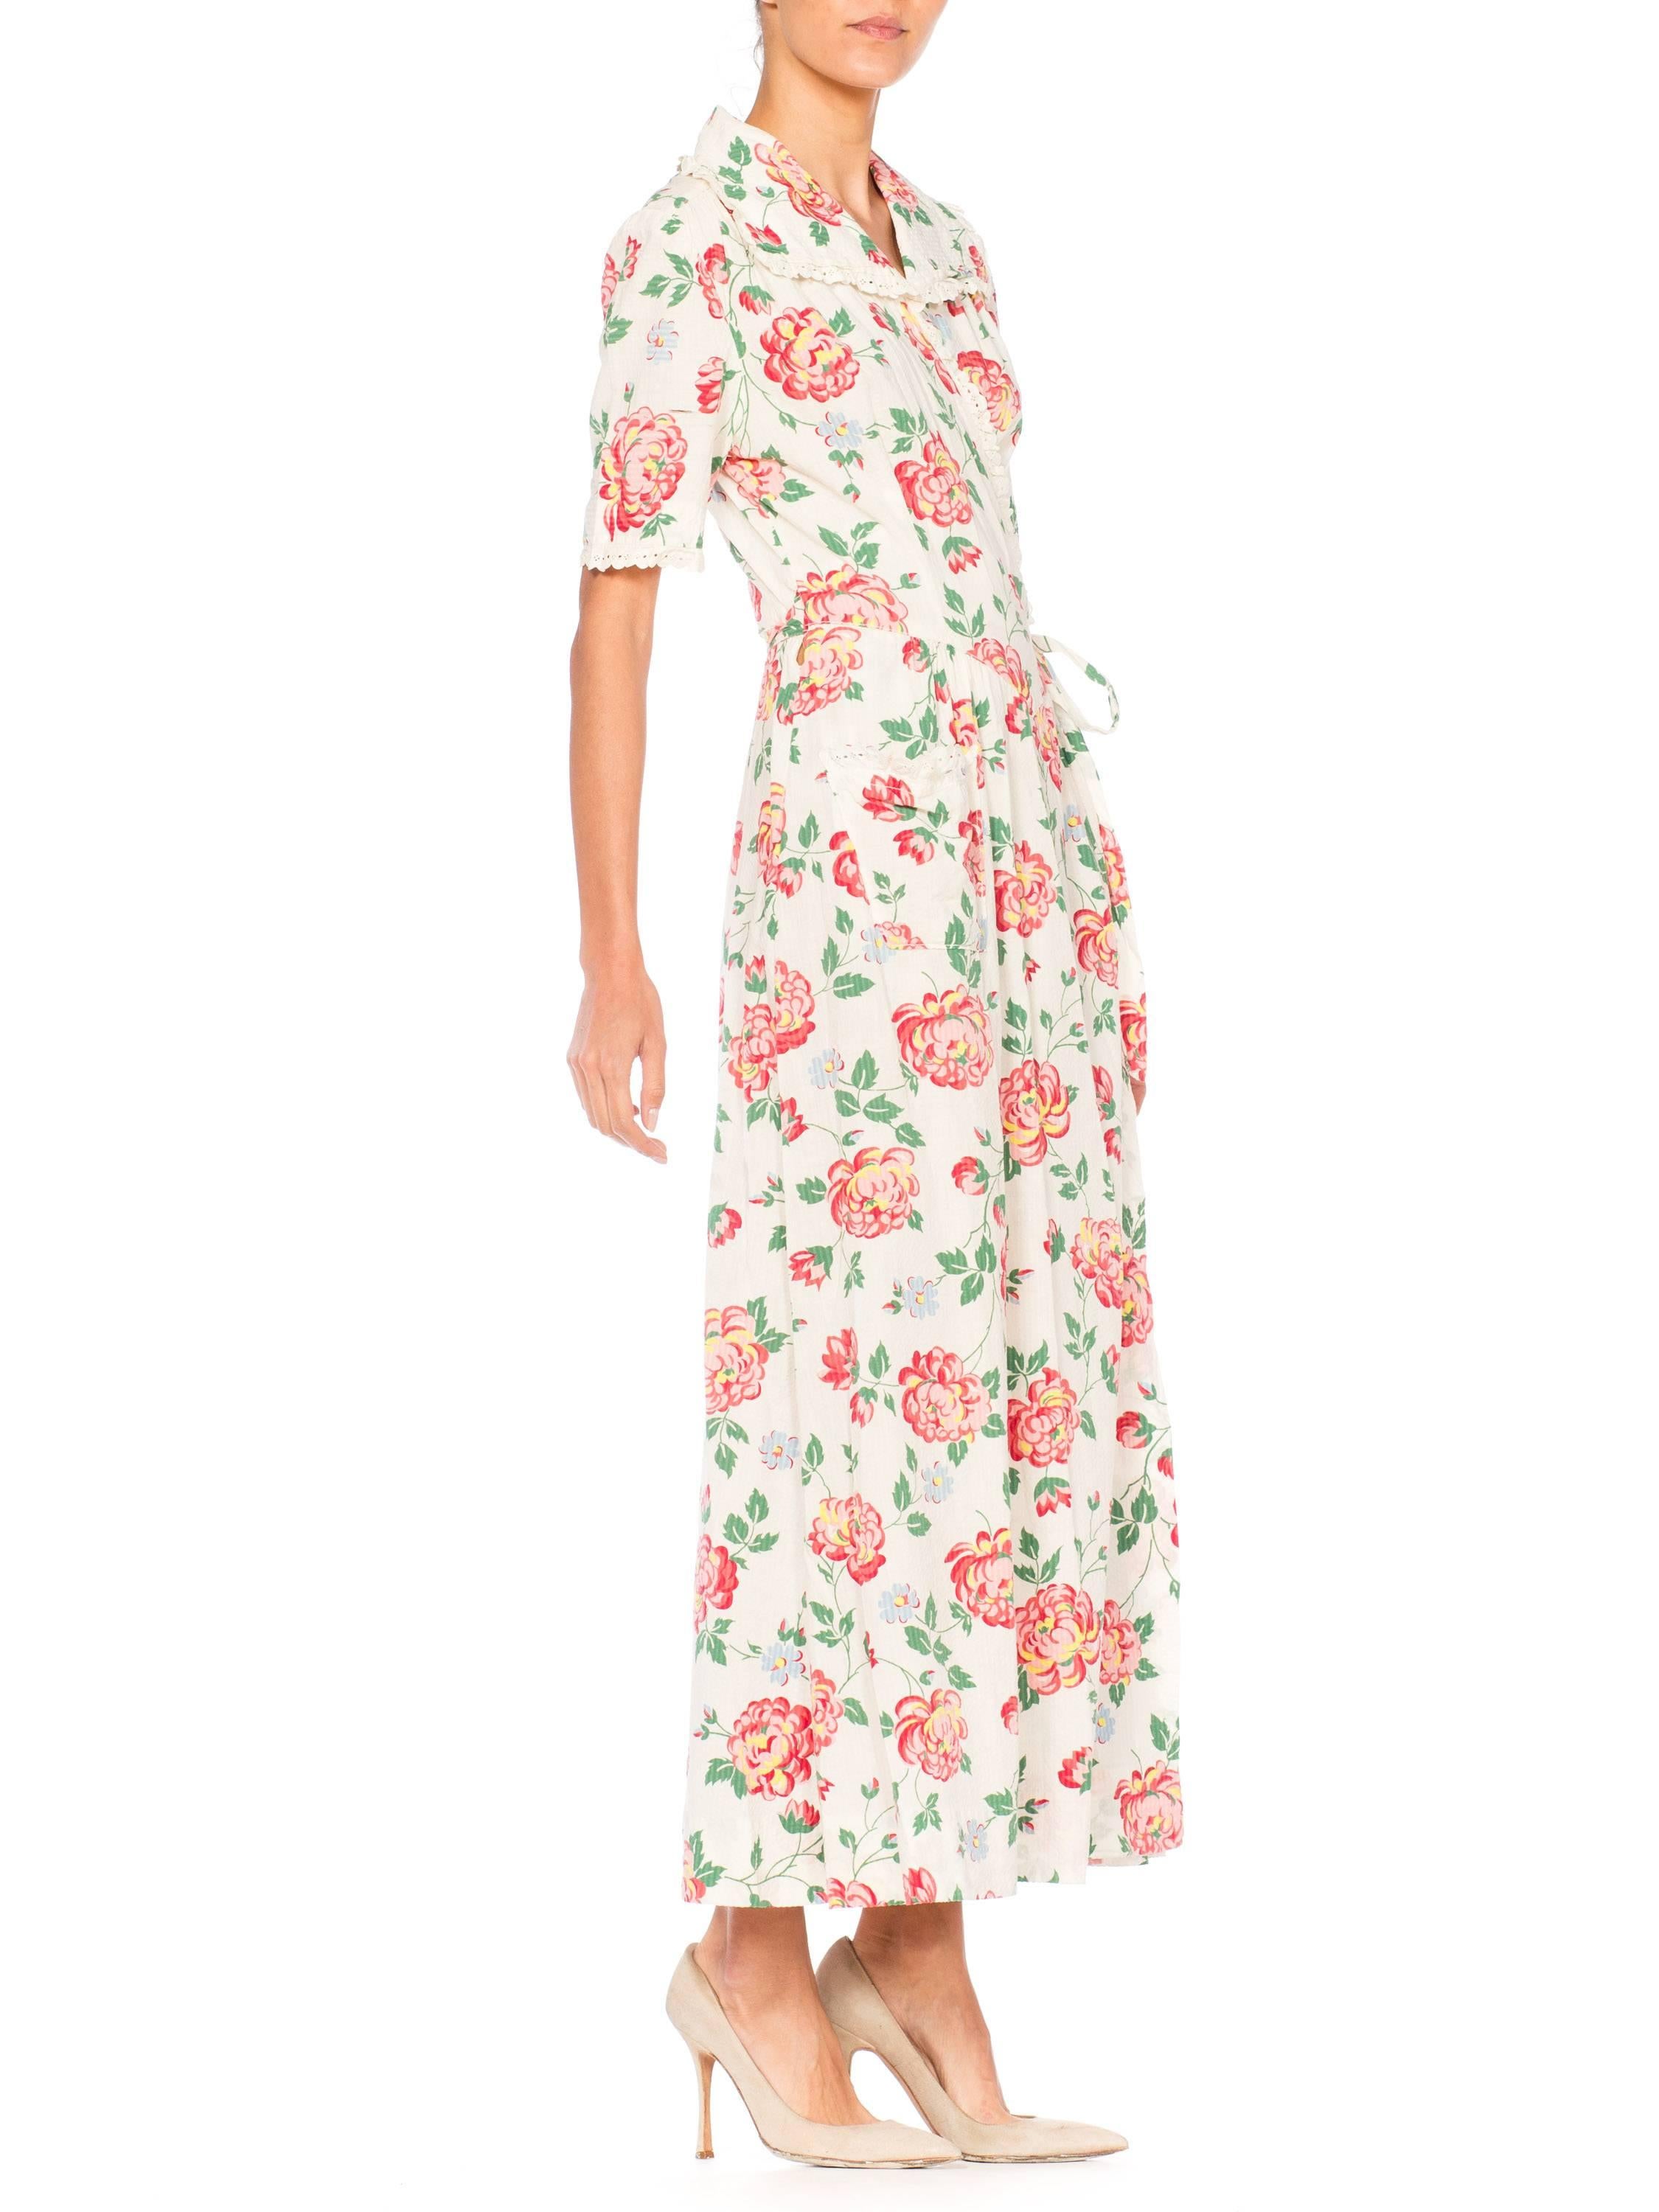 Beige Floral Printed Cotton Dress, 1940s 